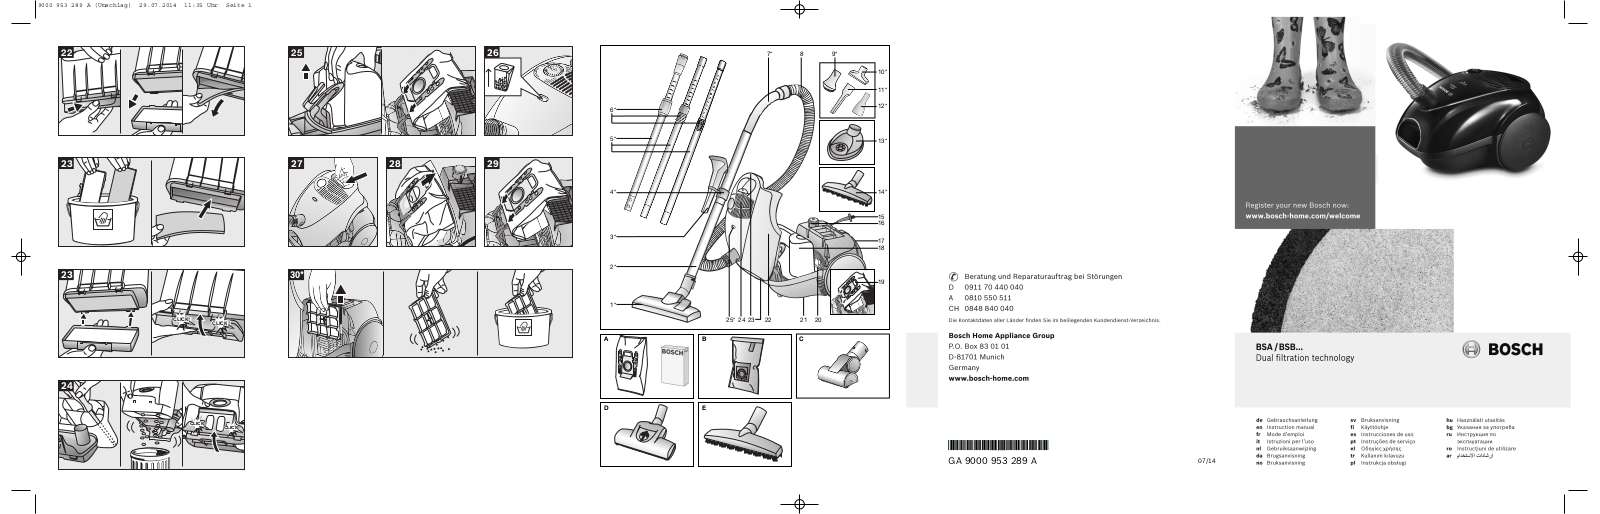 Bosch BSB2884 User Manual